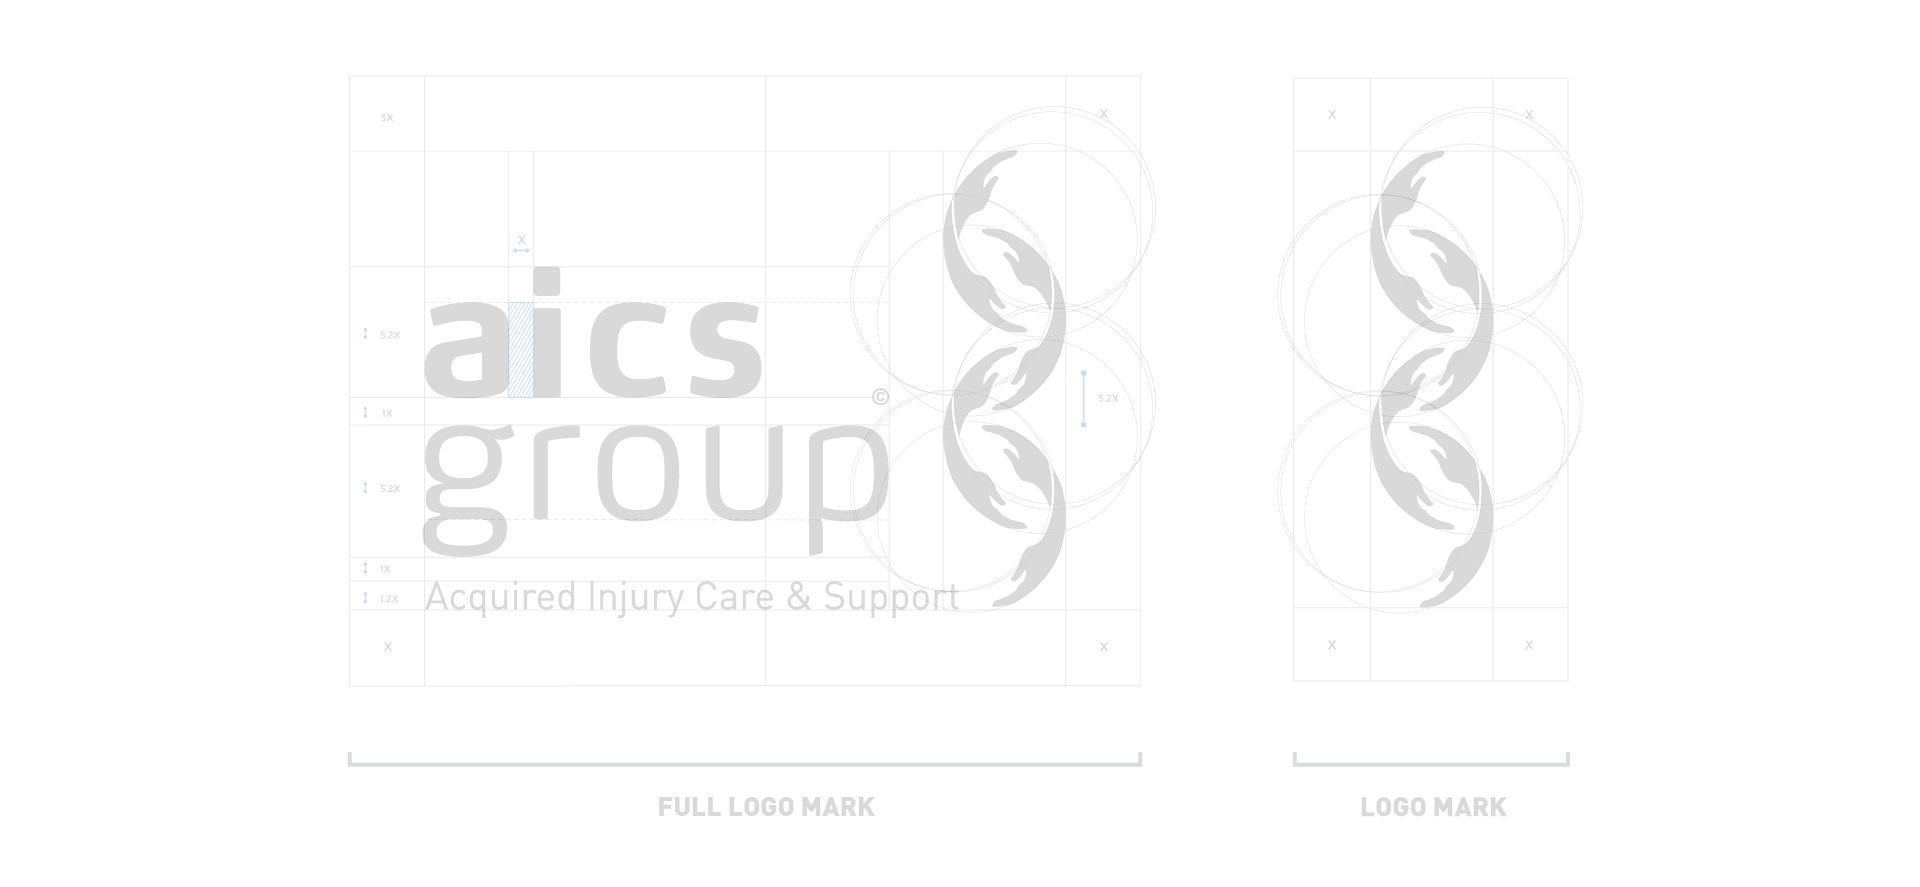 AICS_layout_grid-full-1